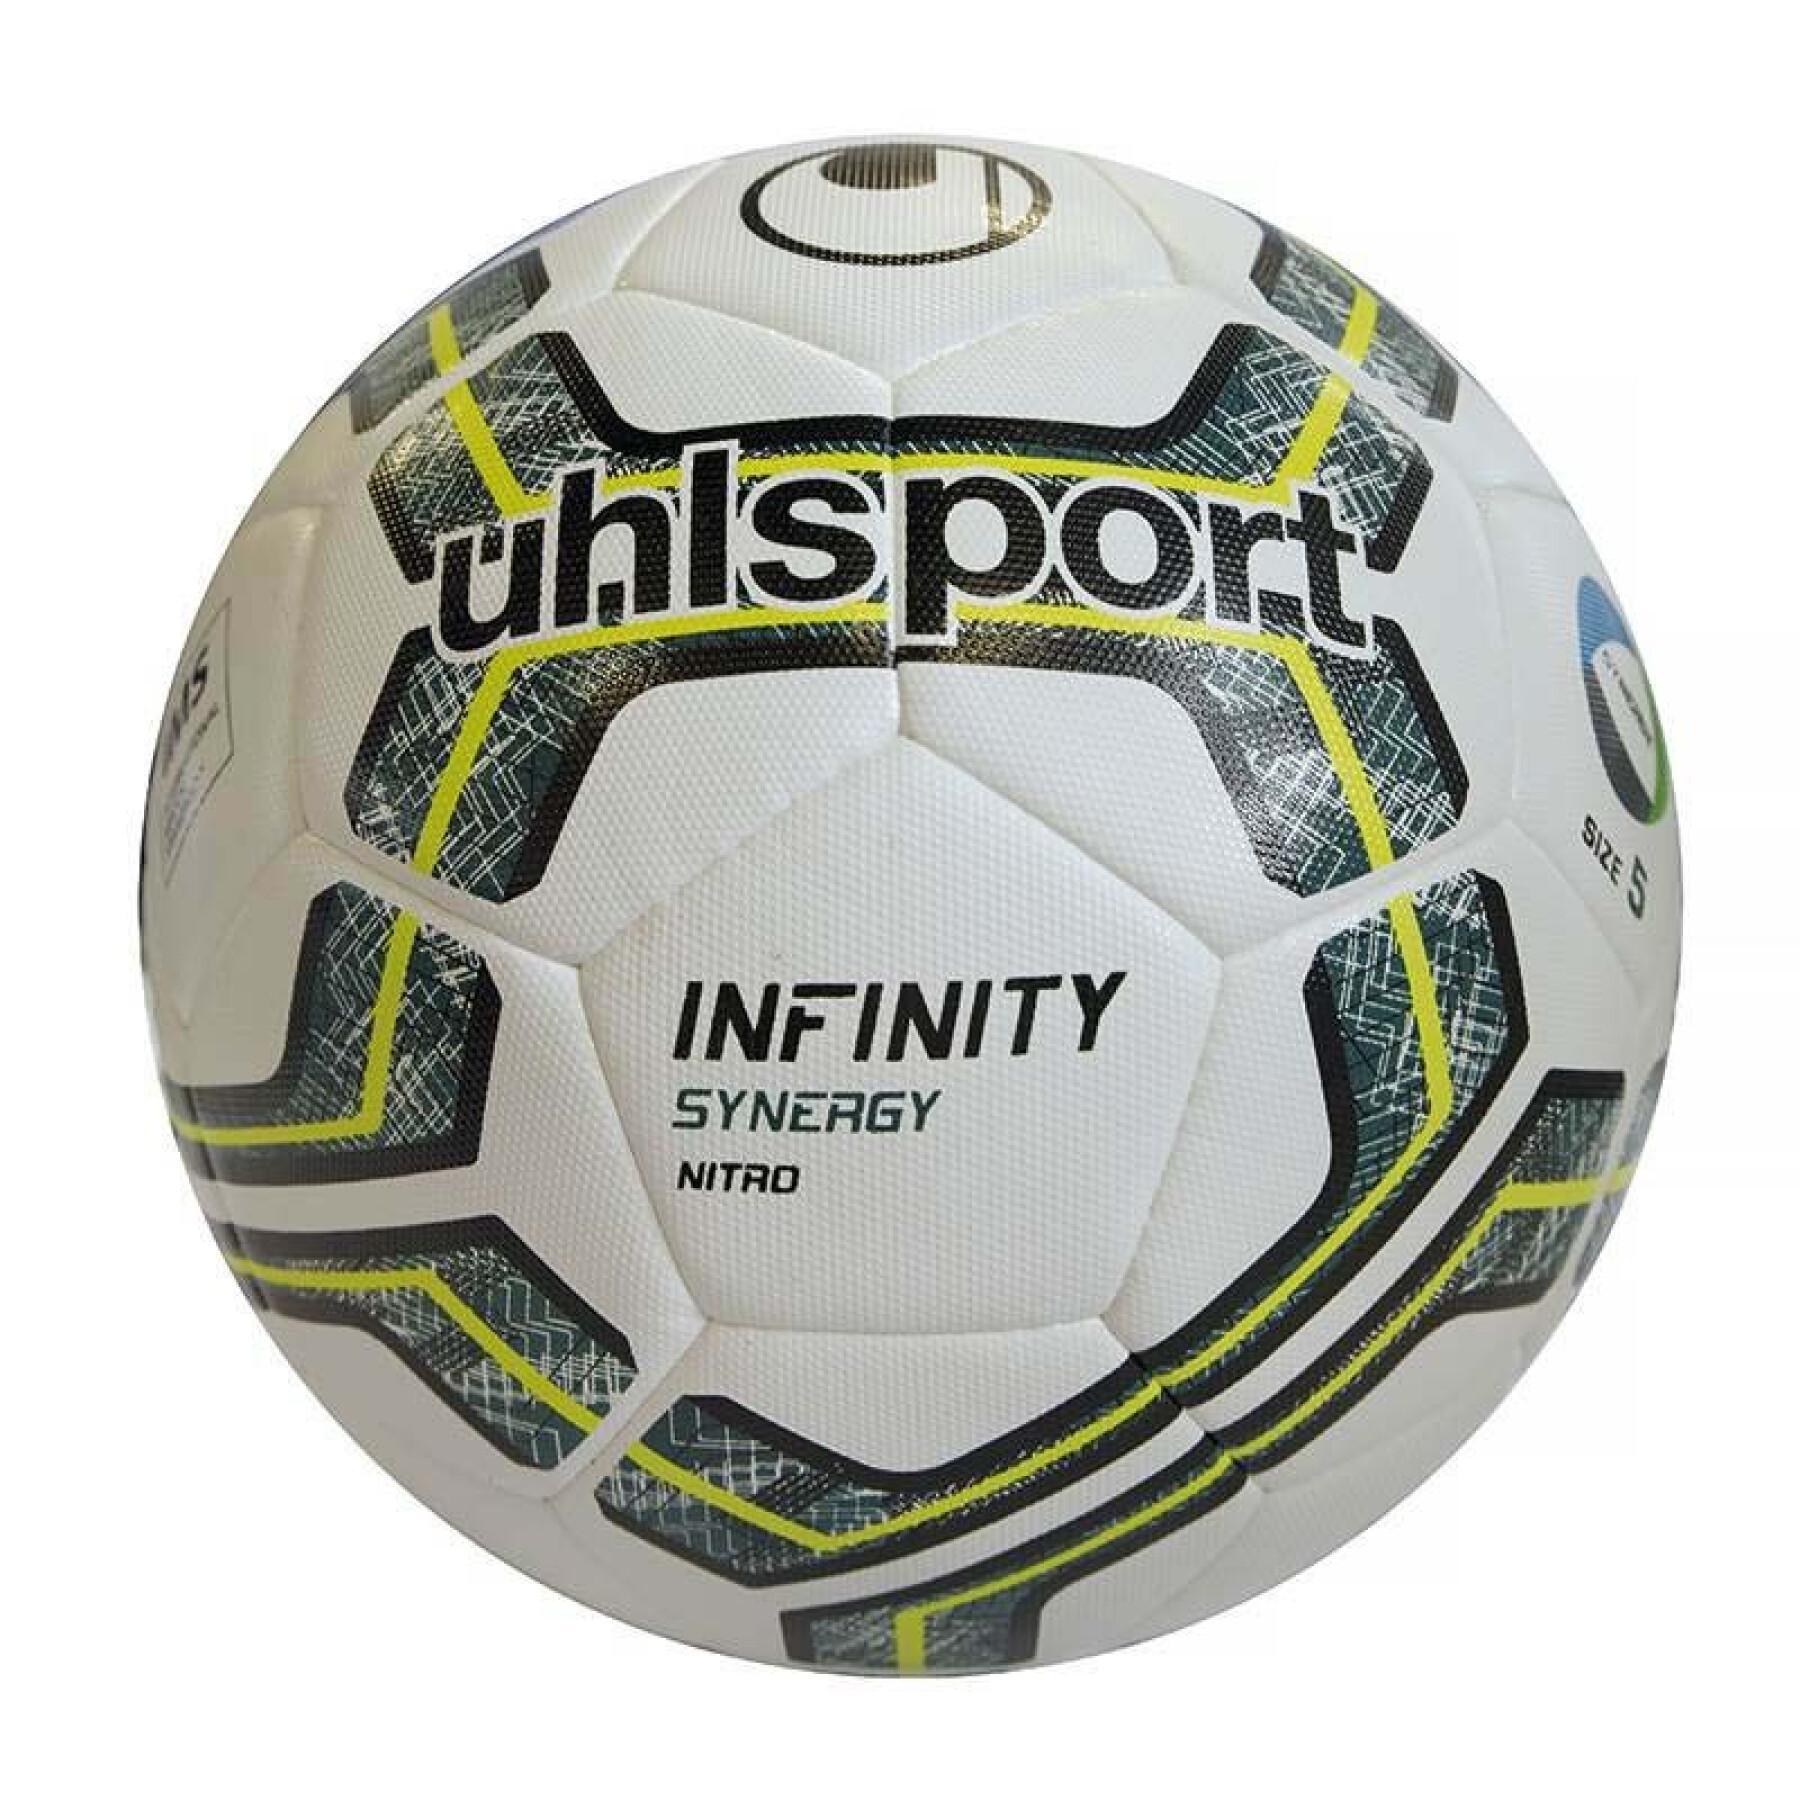 Balão Uhlsport Infinity Synergy Nitro 2.0